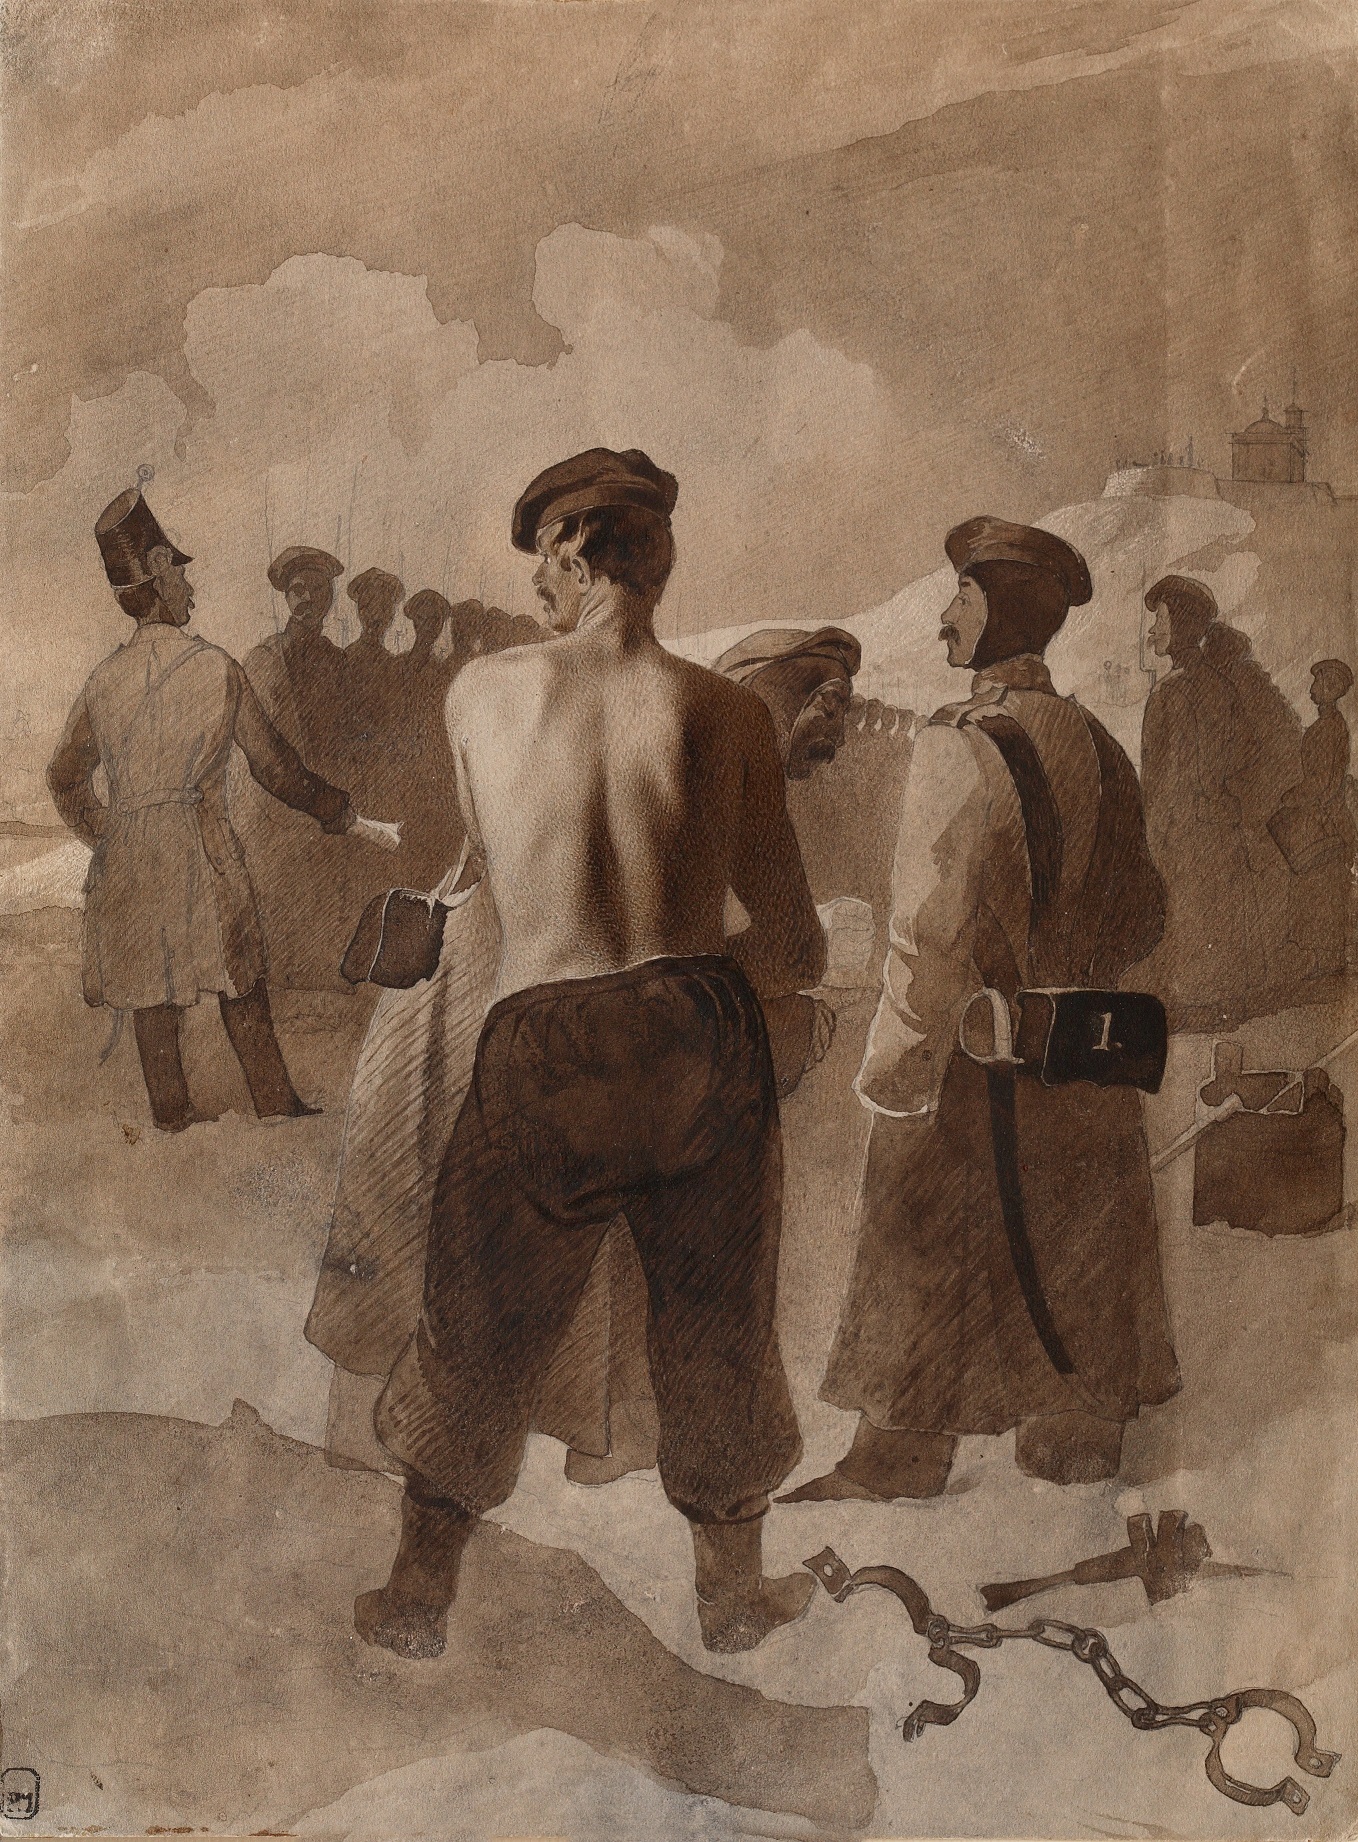 Running the Gauntlet, 1856-1857, ink, bistre